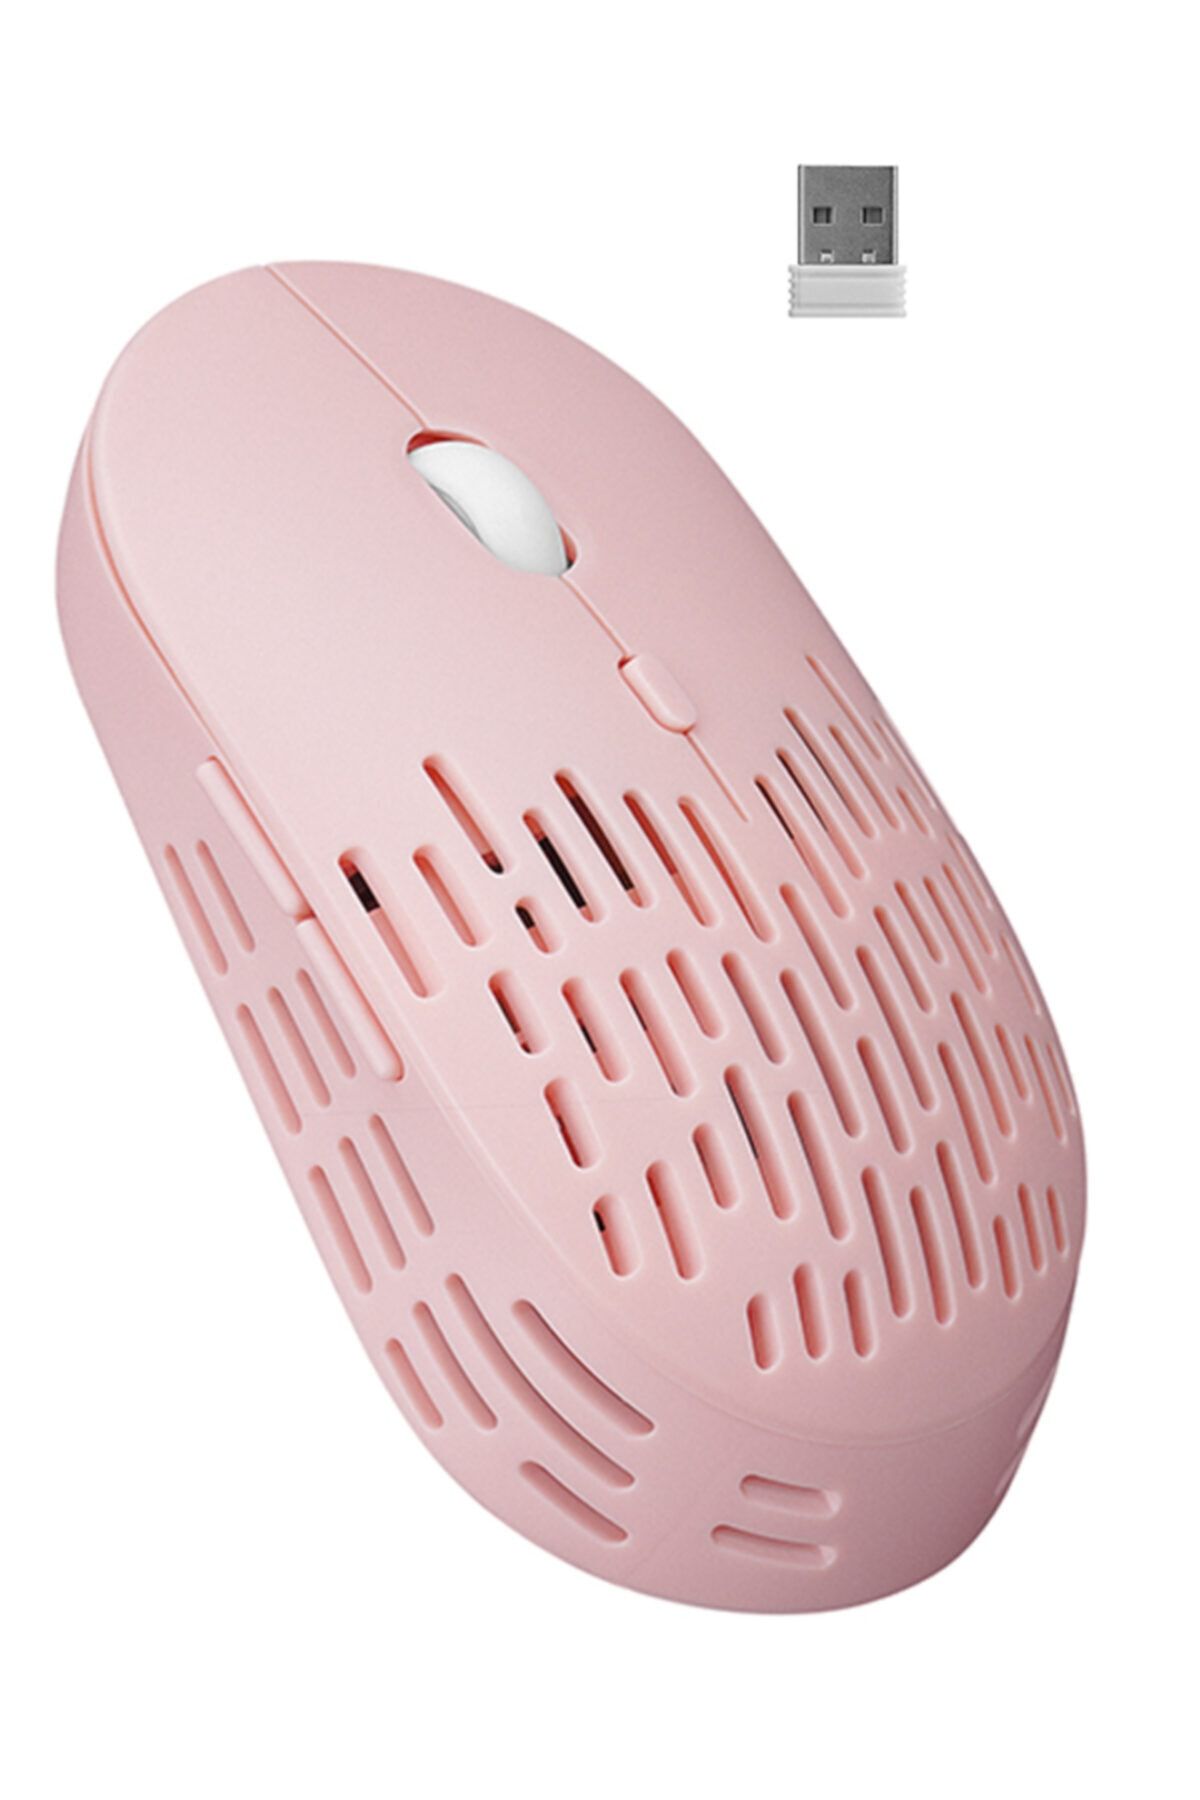 Altec Lansing Albm7422 Şarj Edilebilir Pembe Renkli 1600dpi Optik Kablosuz Mouse